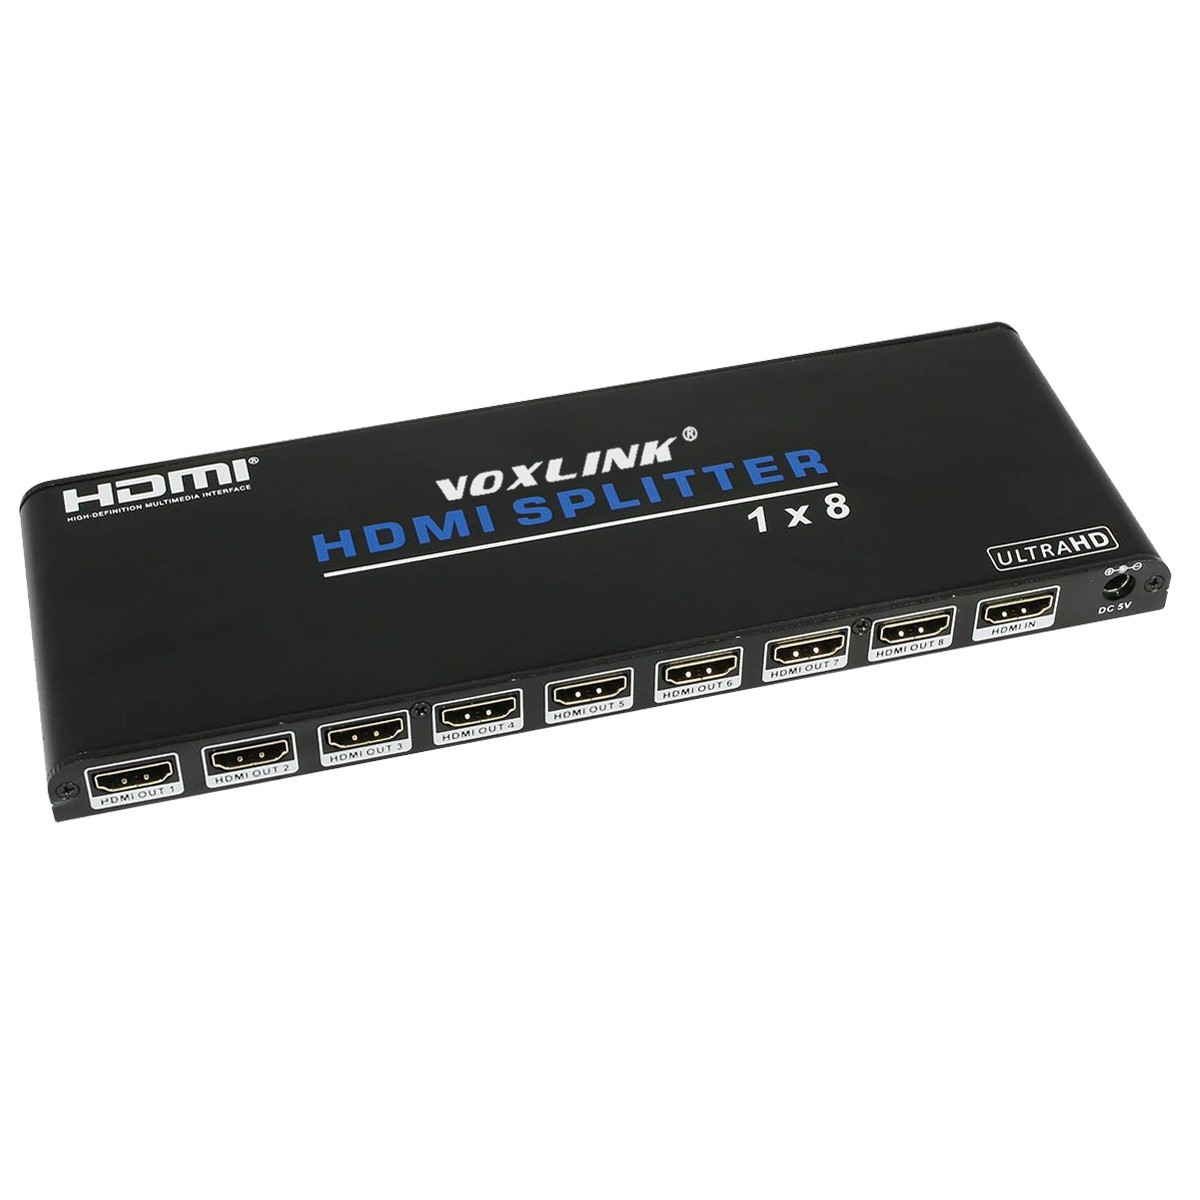 VOXLINK UHD 1x8 HDMI Splitter AU